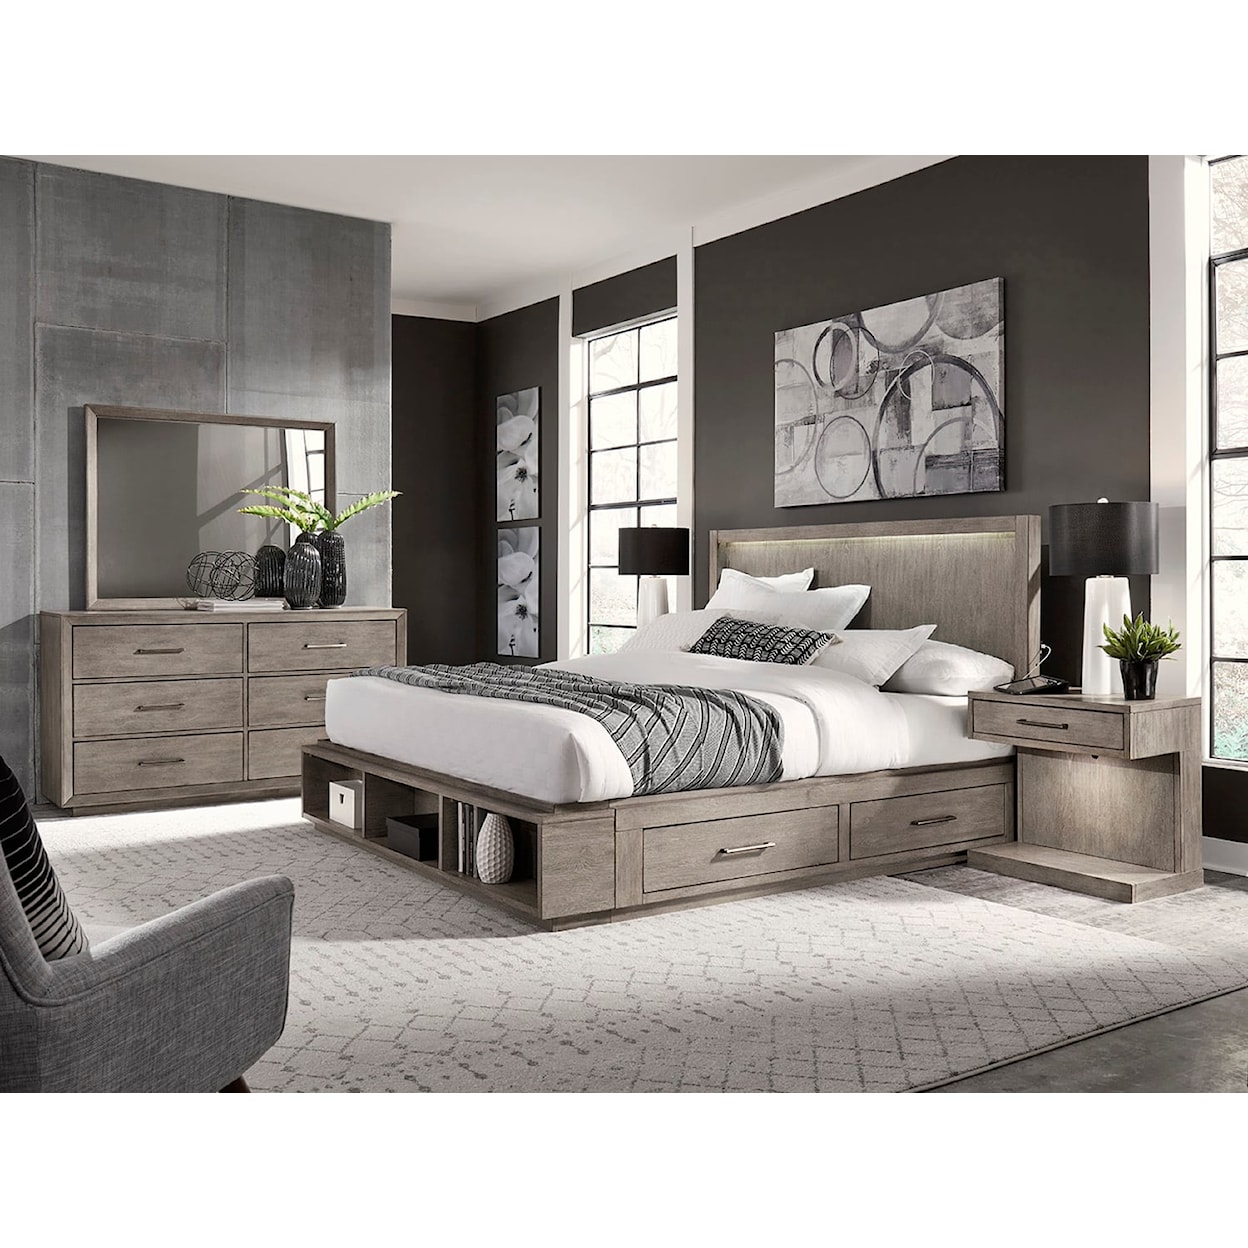 Aspenhome Platinum Queen Bed, Dresser, Mirror